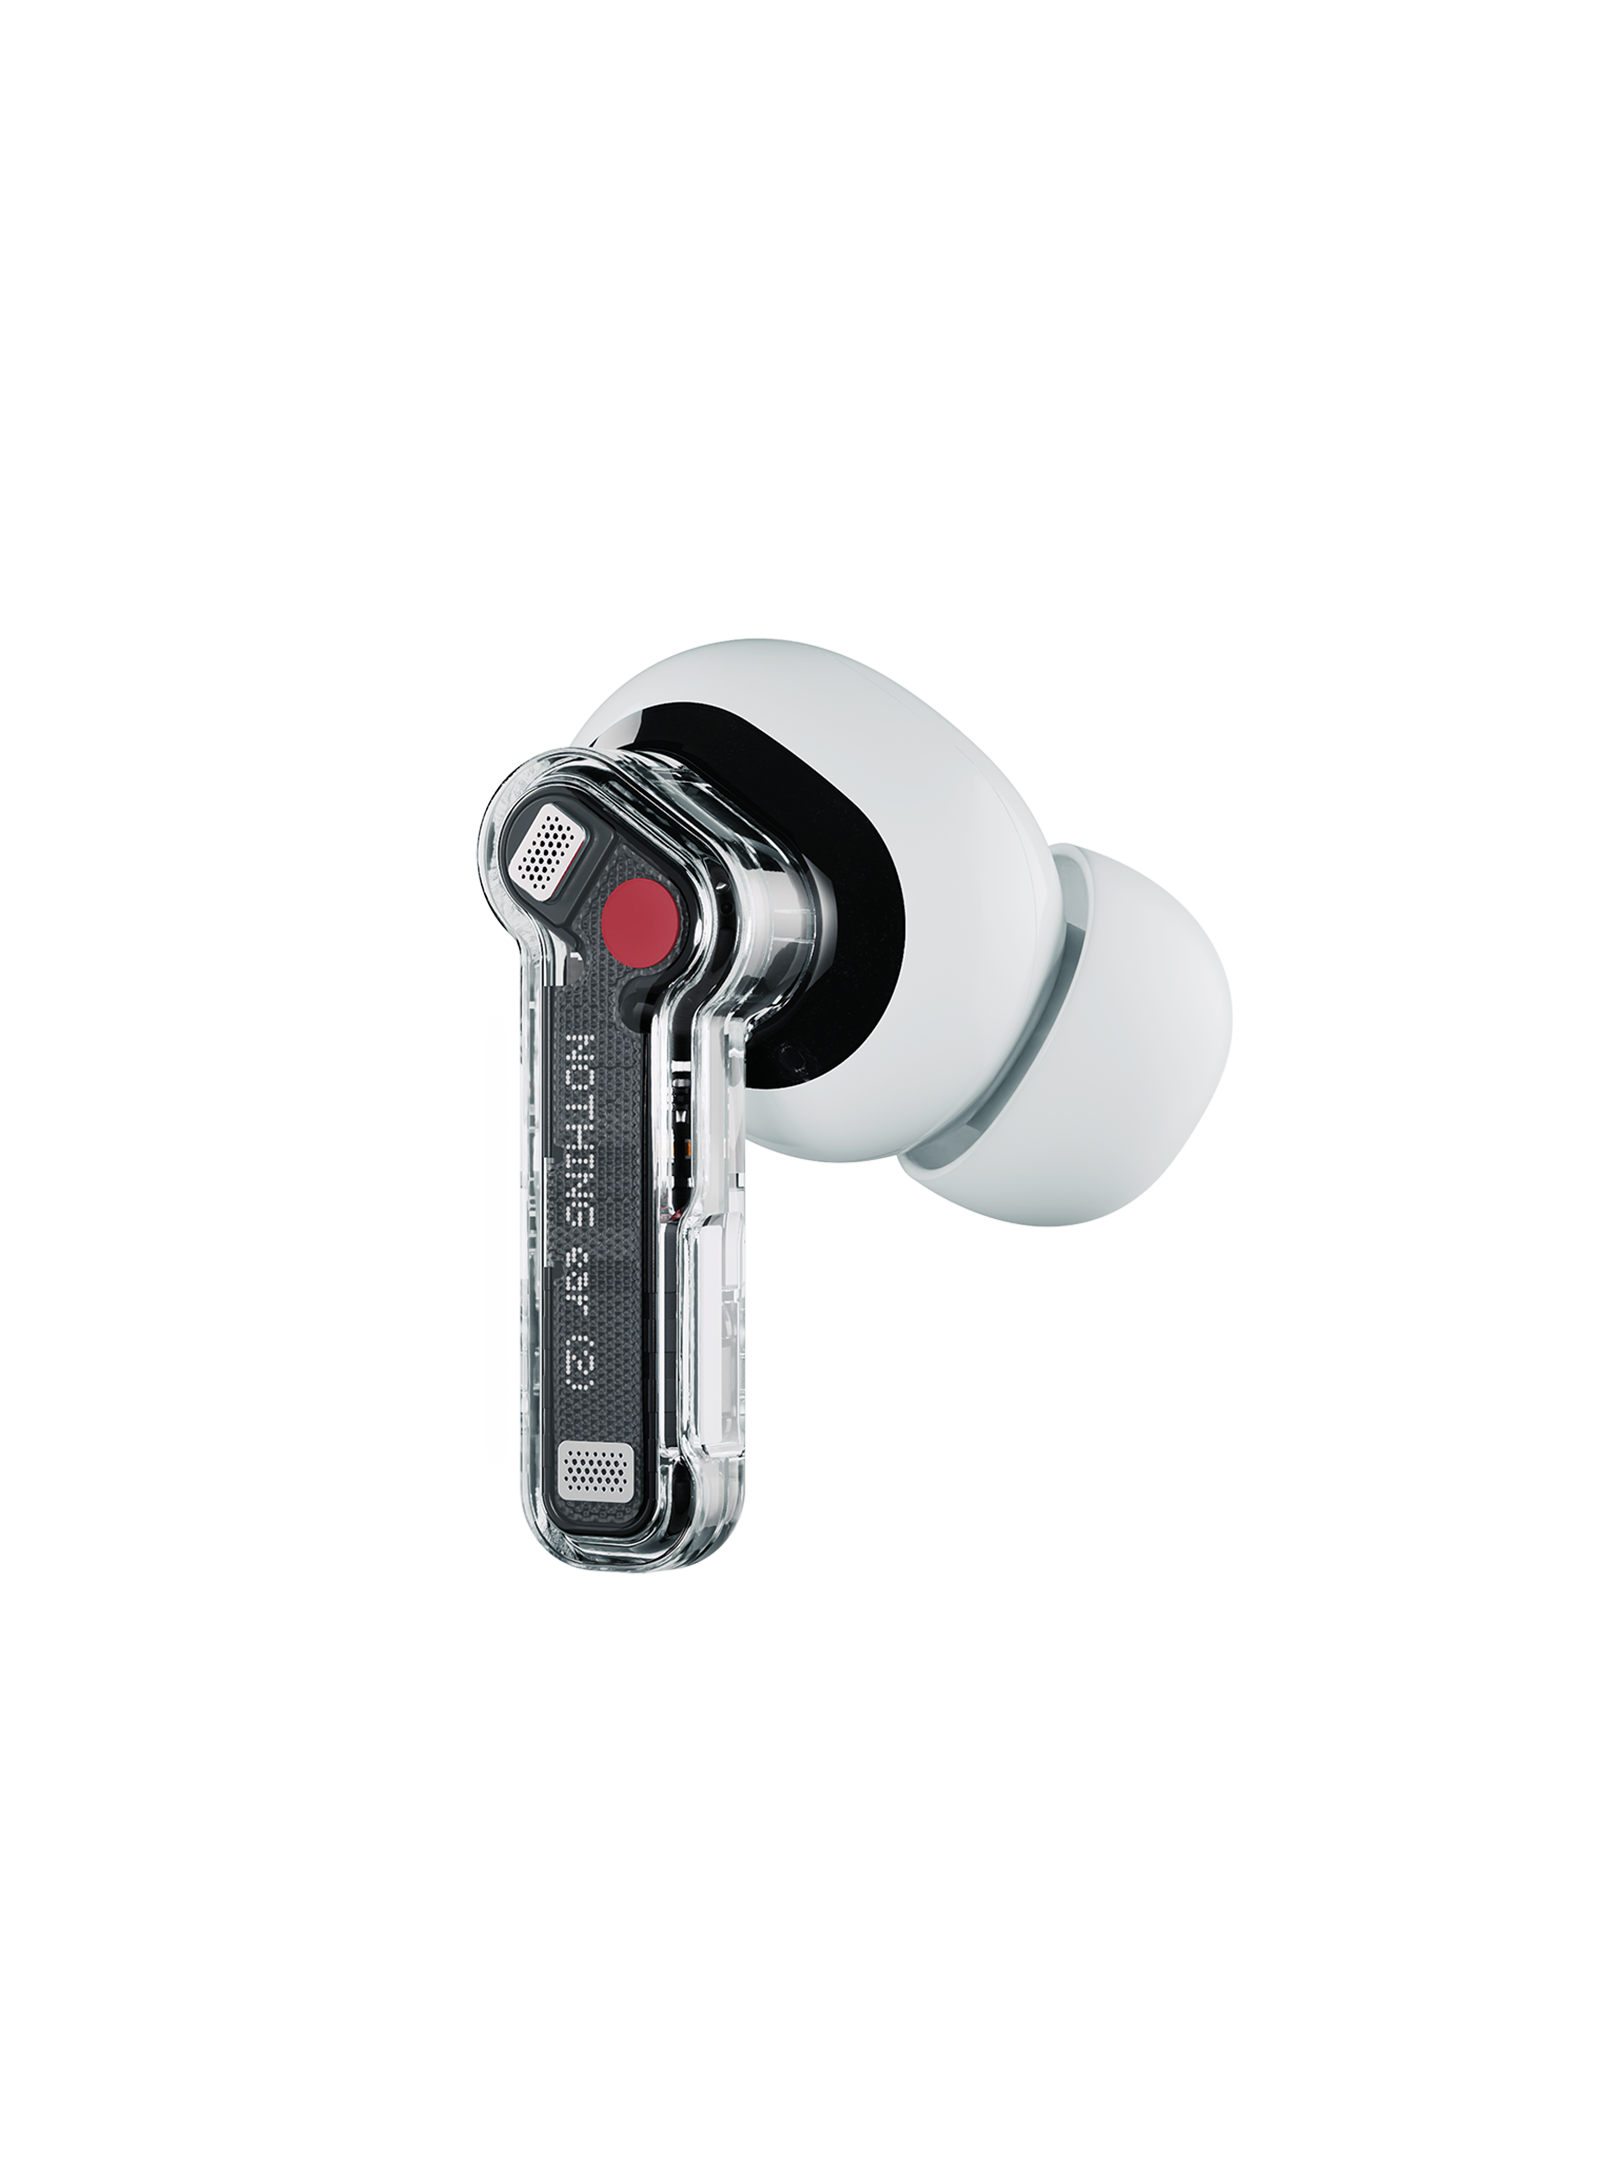 Nothing Ear 2 auriculares inalámbricos para teléfonos móviles inteligentes,  auriculares inalámbricos Usb, auriculares blancos impermeables, estéreo  inalámbrico verdadero BK - AliExpress